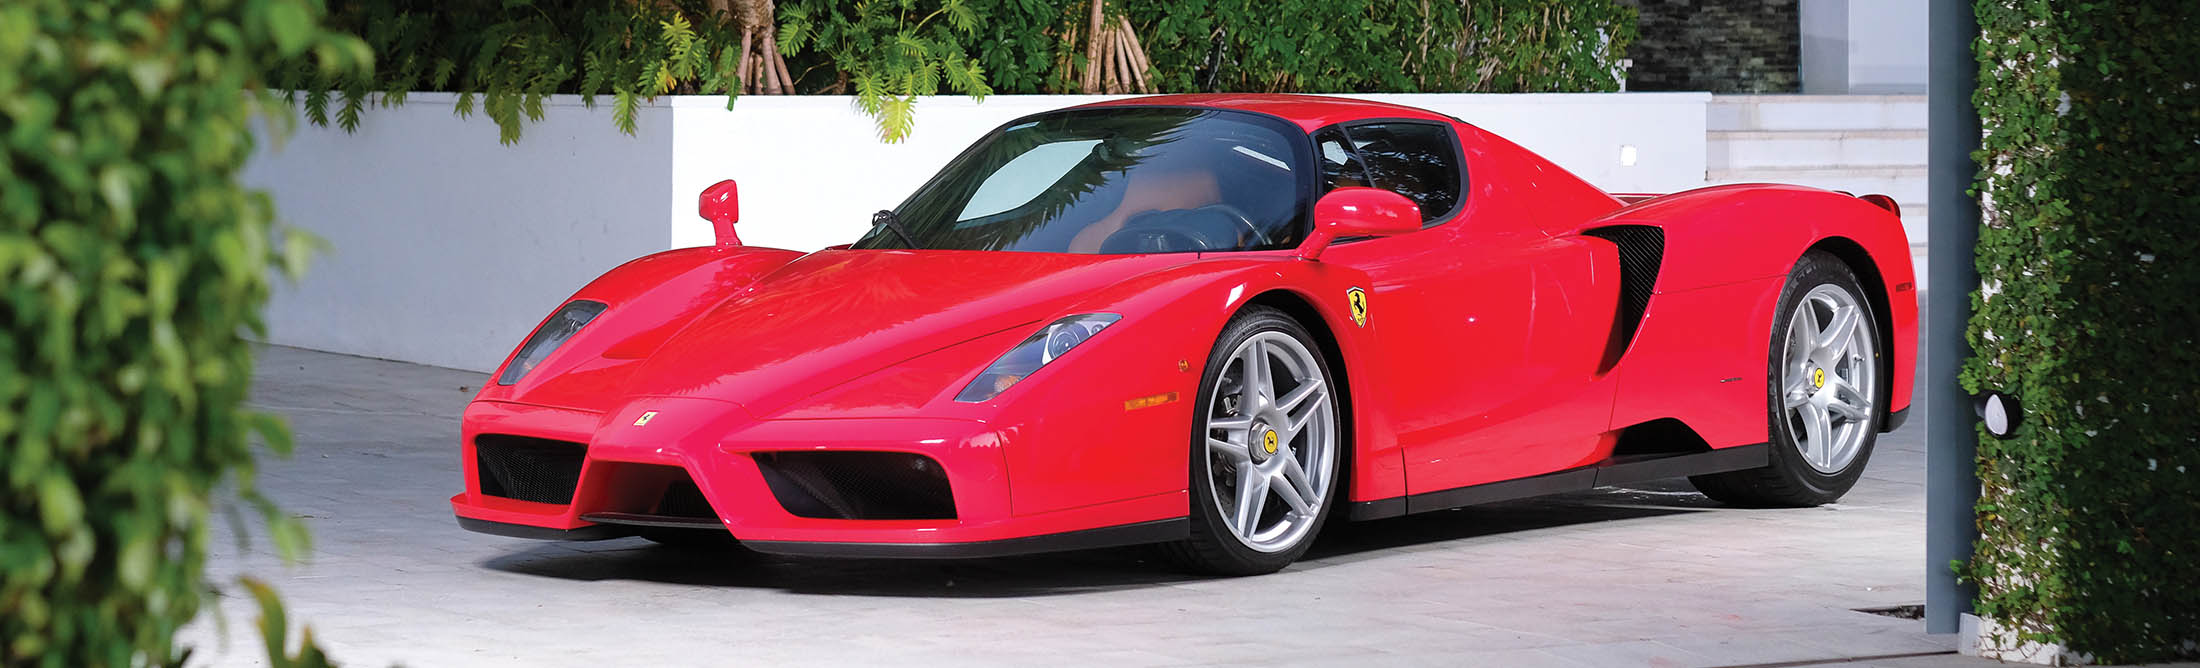 Tommy Hilfiger S Ferrari Enzo Might Fetch 3 Million At